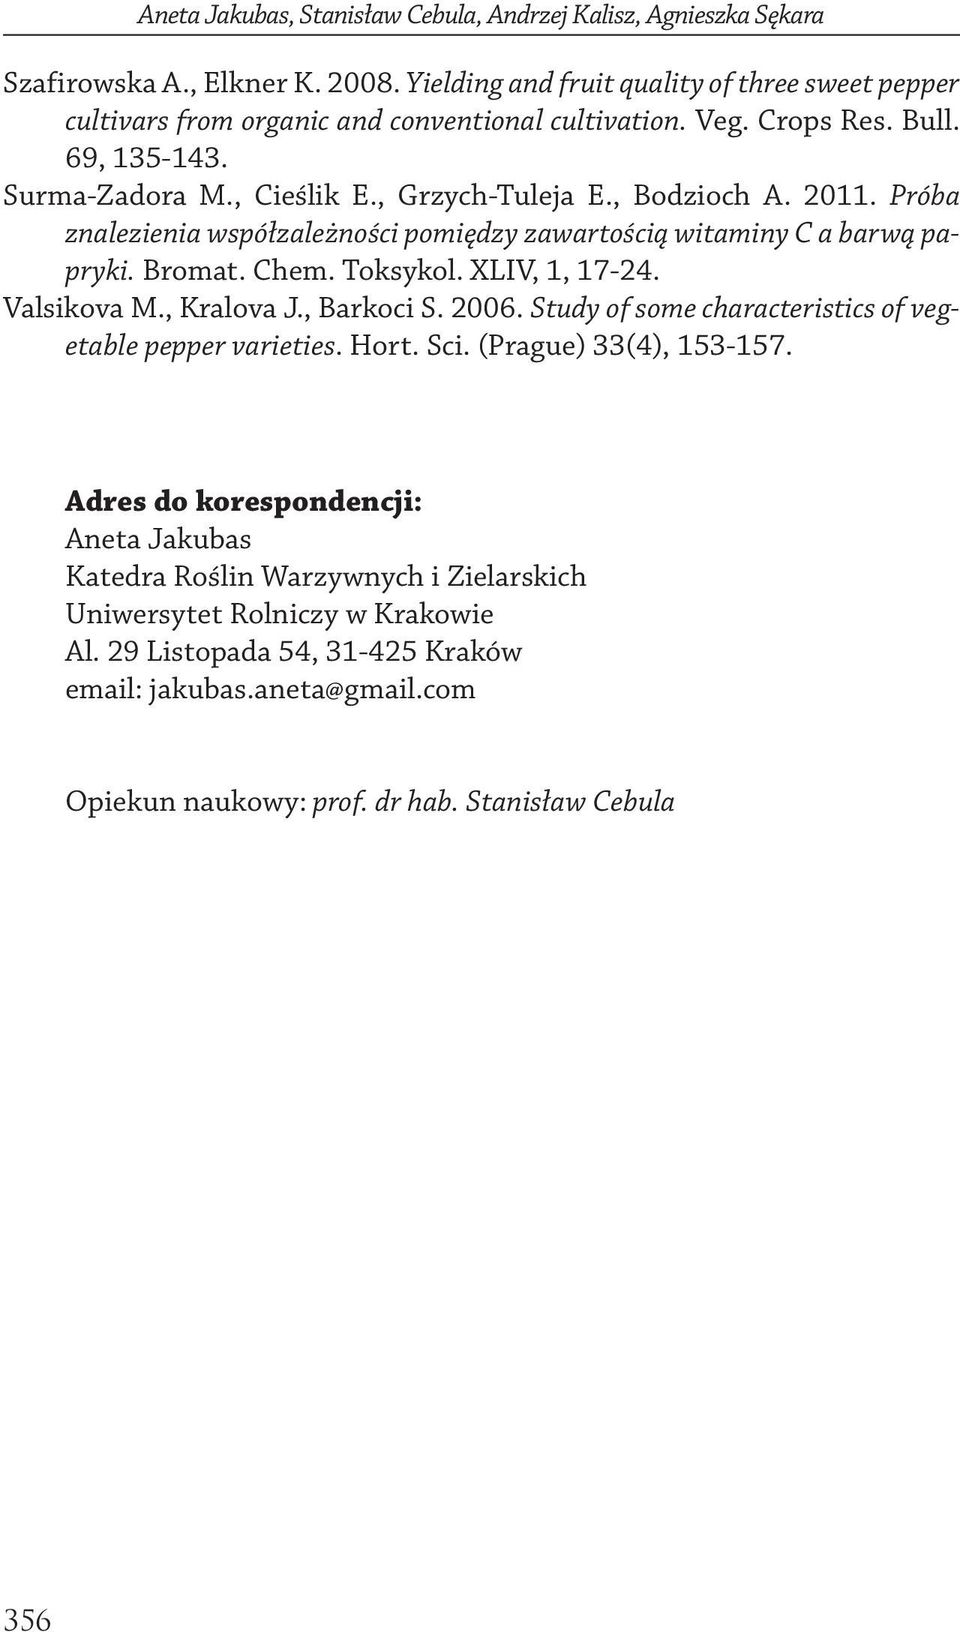 Toksykol. XLIV, 1, 17-24. Vlsikov M., Krlov J., Brkoci S. 2006. Study of some chrcteristics of vegetble pepper vrieties. Hort. Sci. (Prgue) 33(4), 153-157.